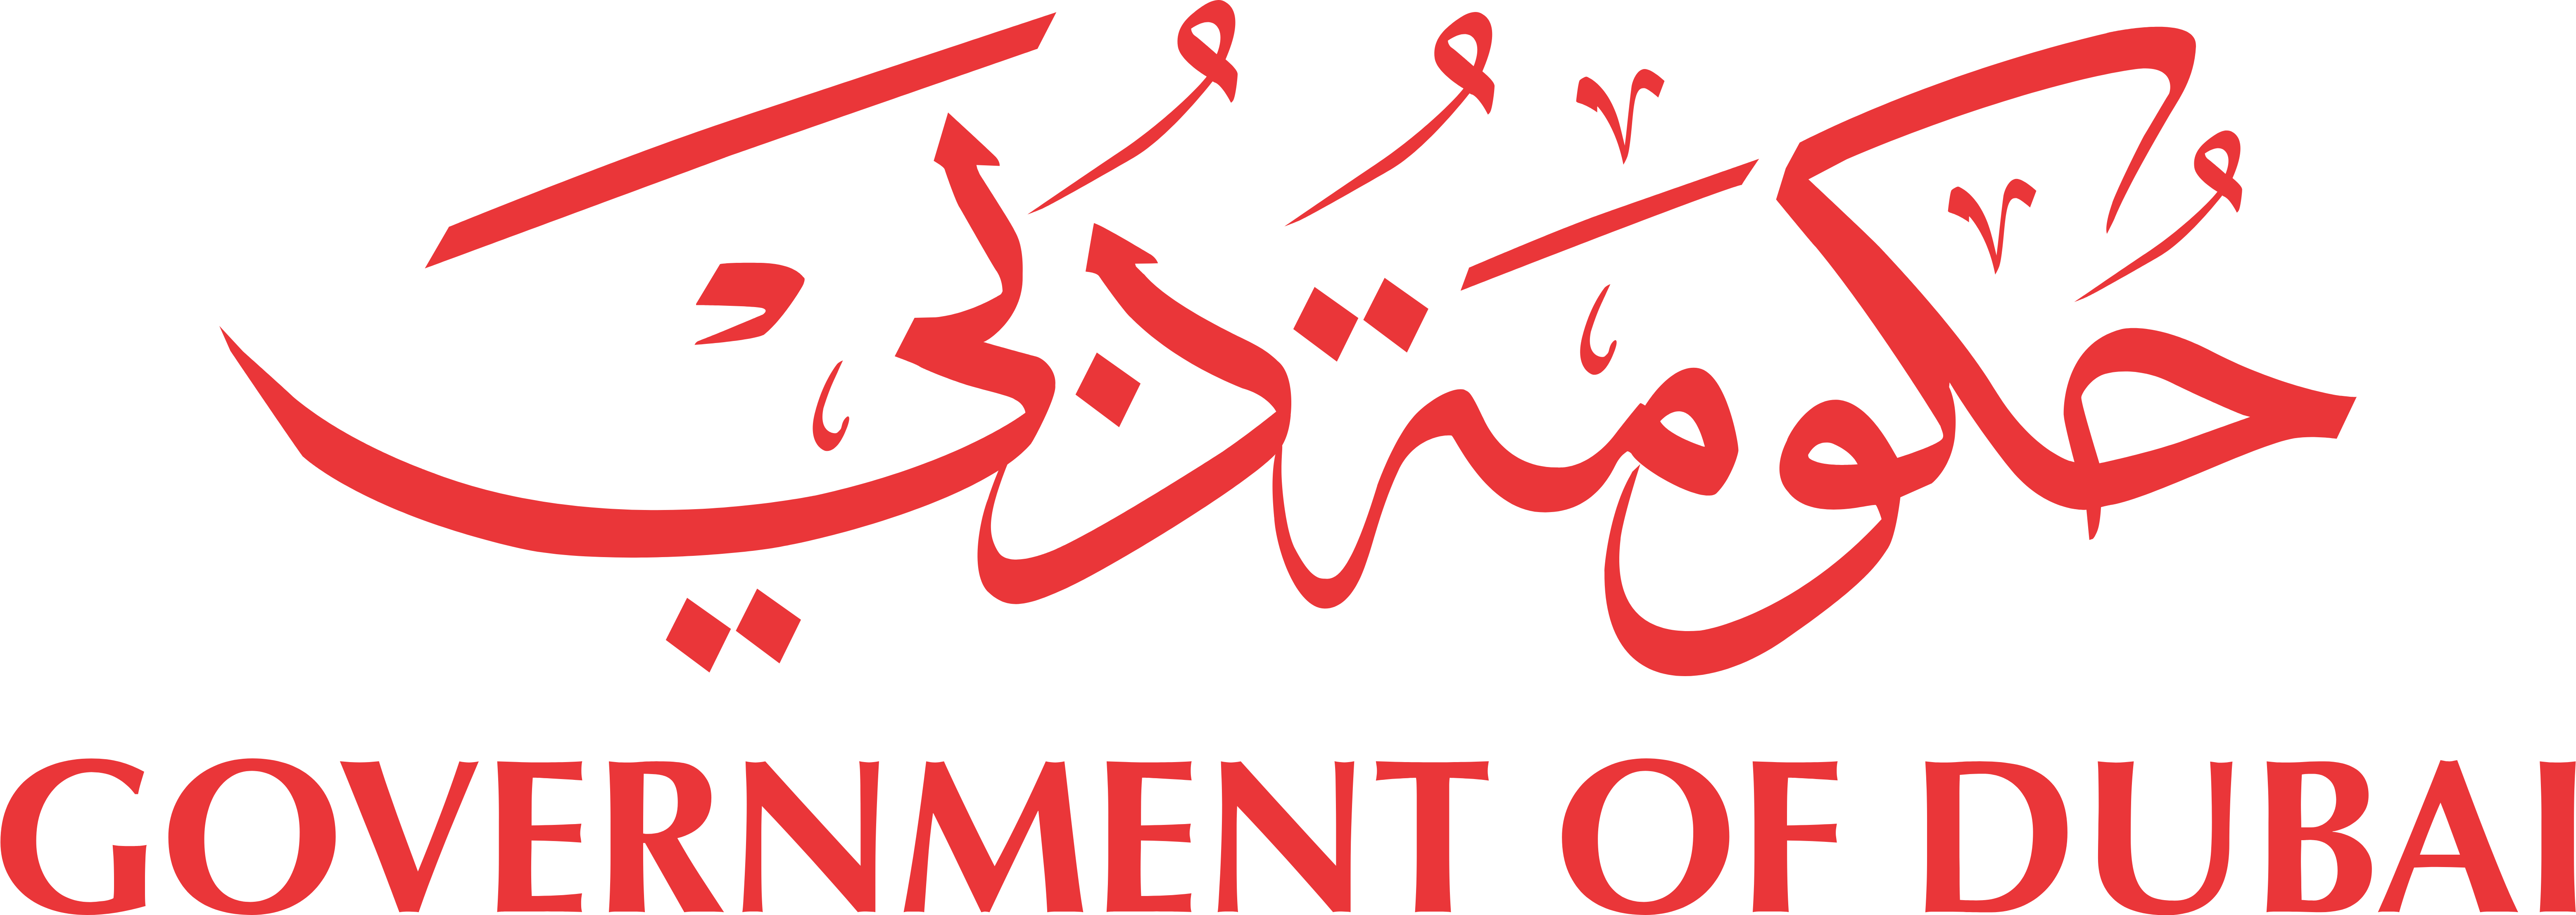 Dubai Logo Png